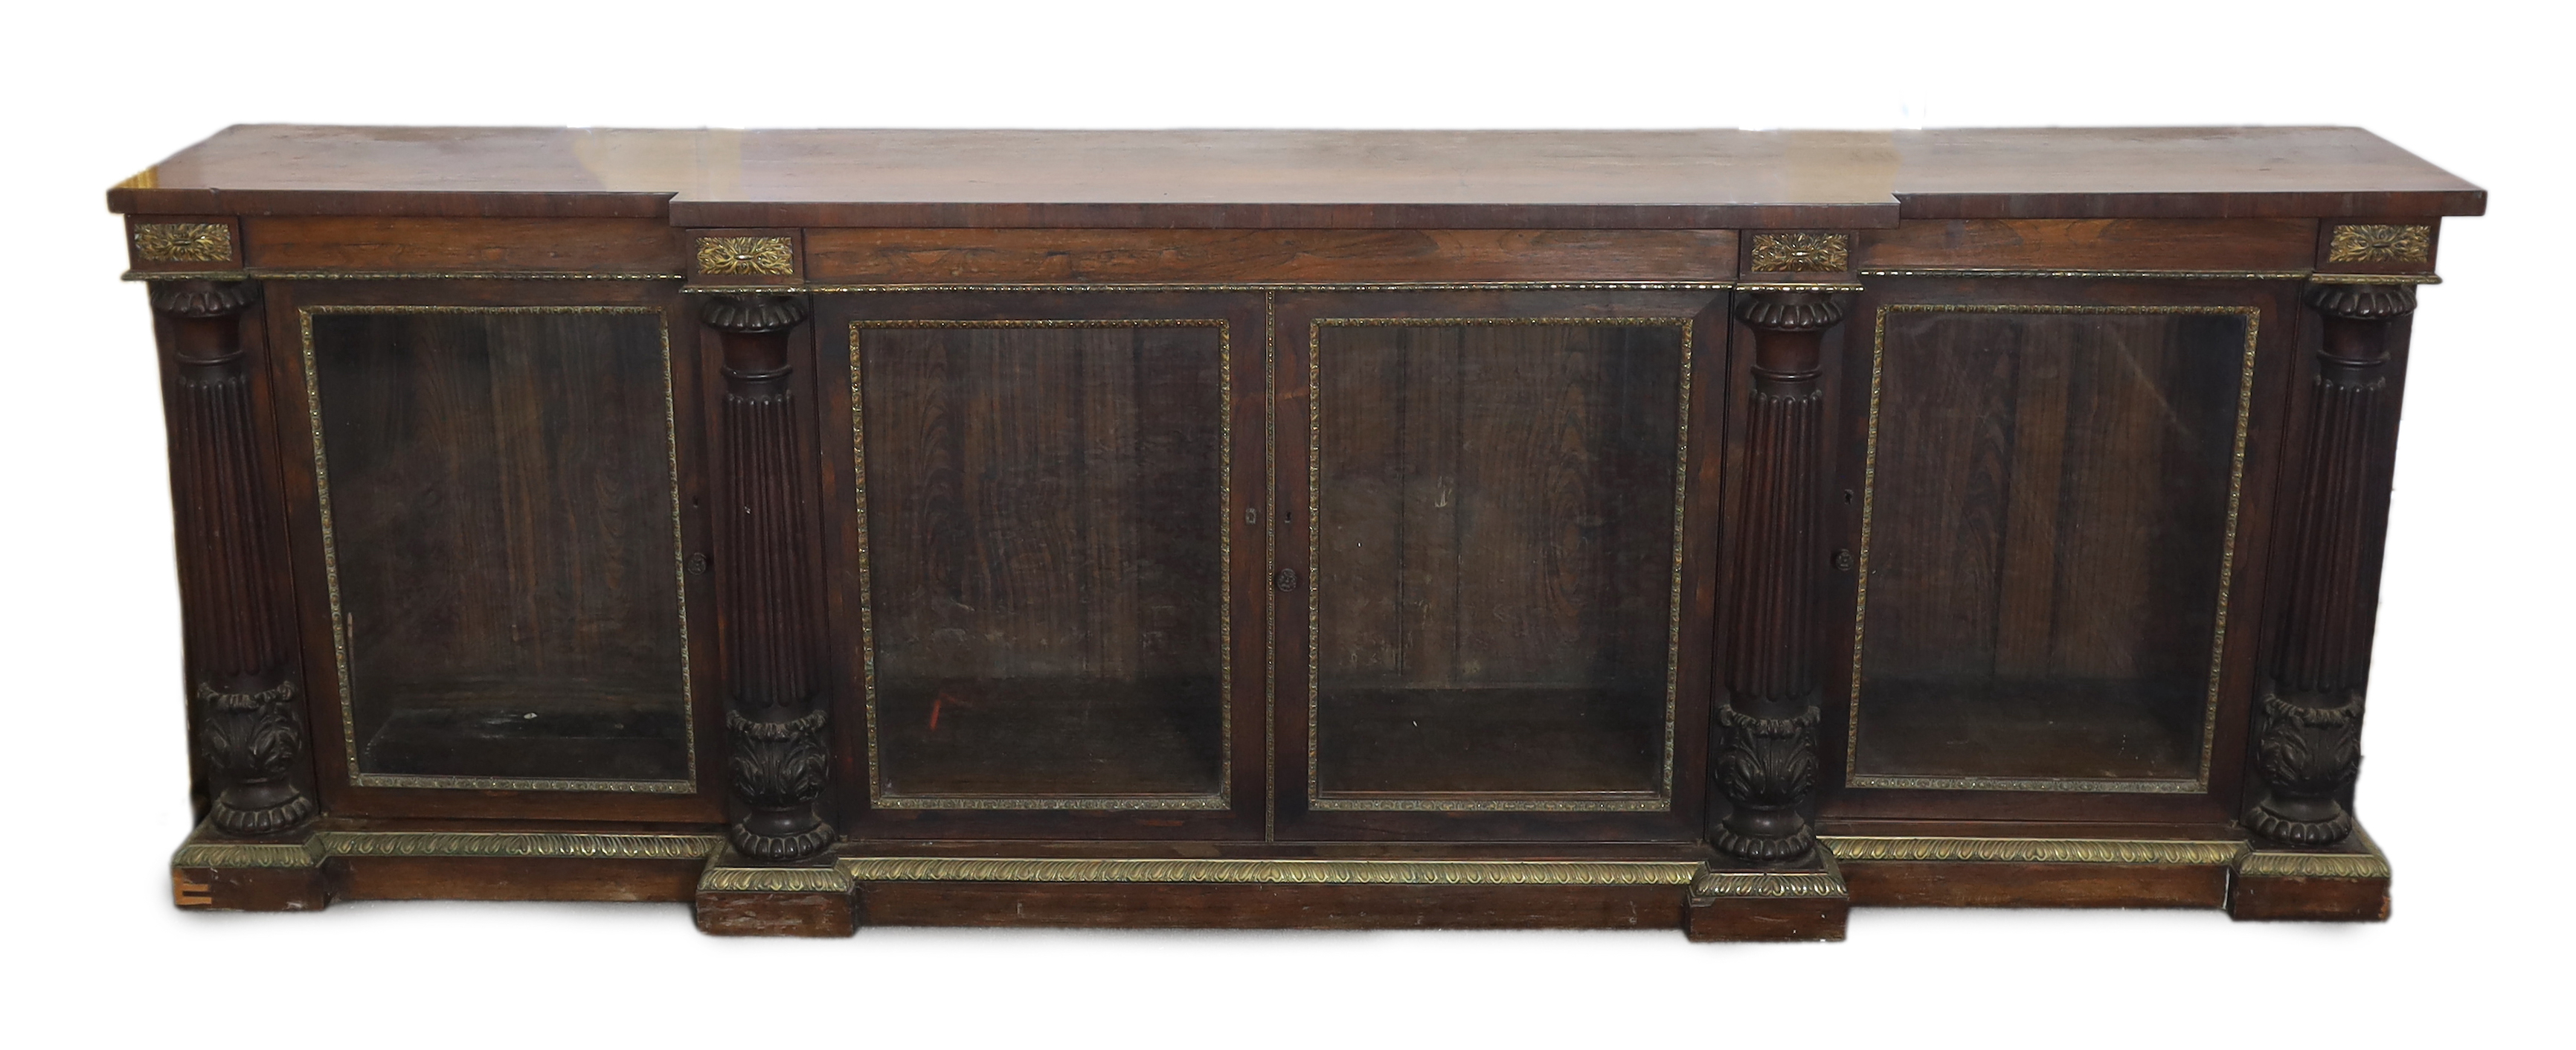 A George IV ormolu mounted rosewood breakfront dwarf bookcase, width 306cm, depth 60cm, height 102cm